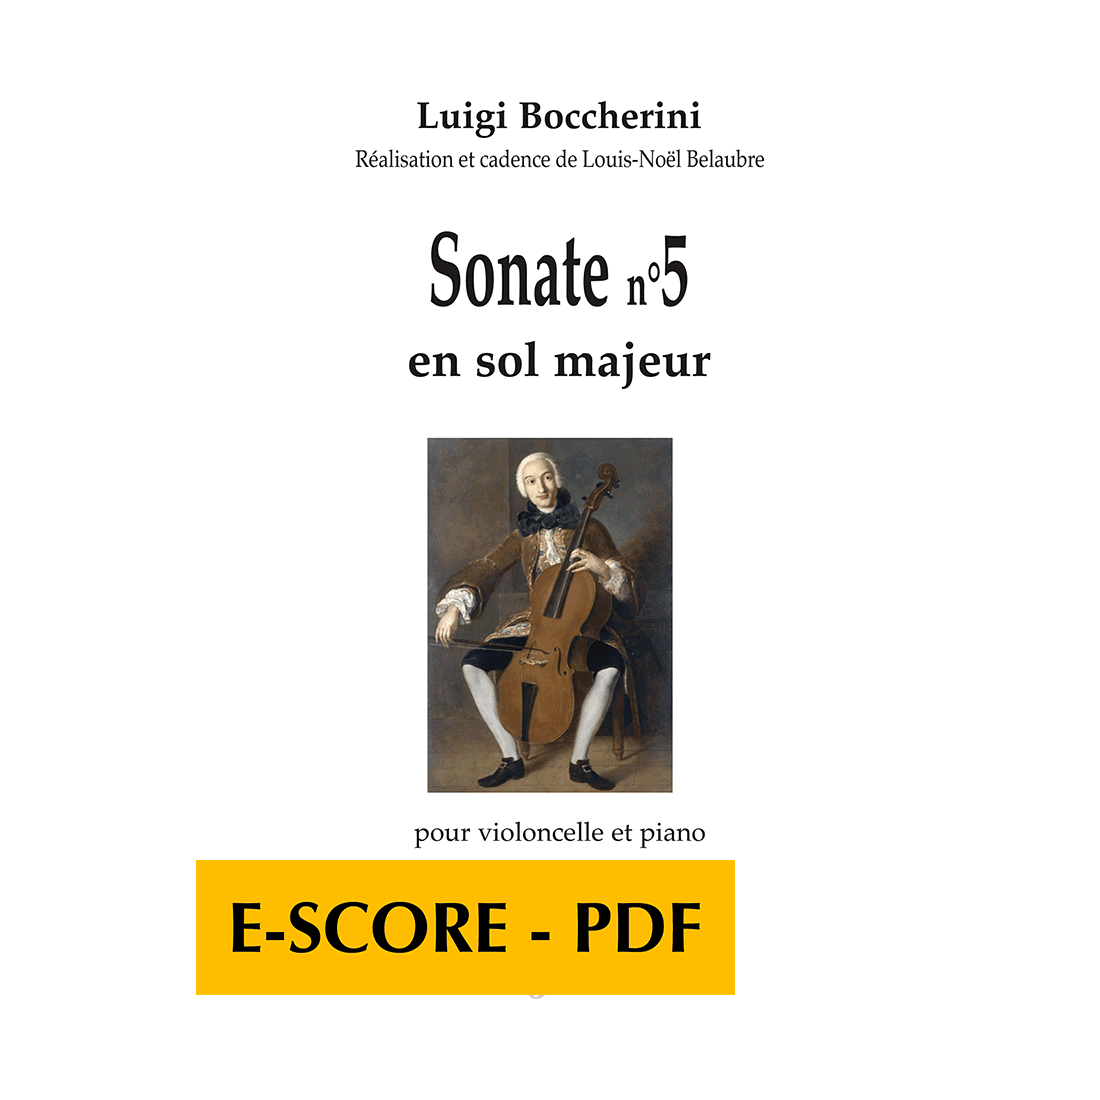 Sonate n°5 en sol majeur für Violoncello und Klavier - E-score PDF